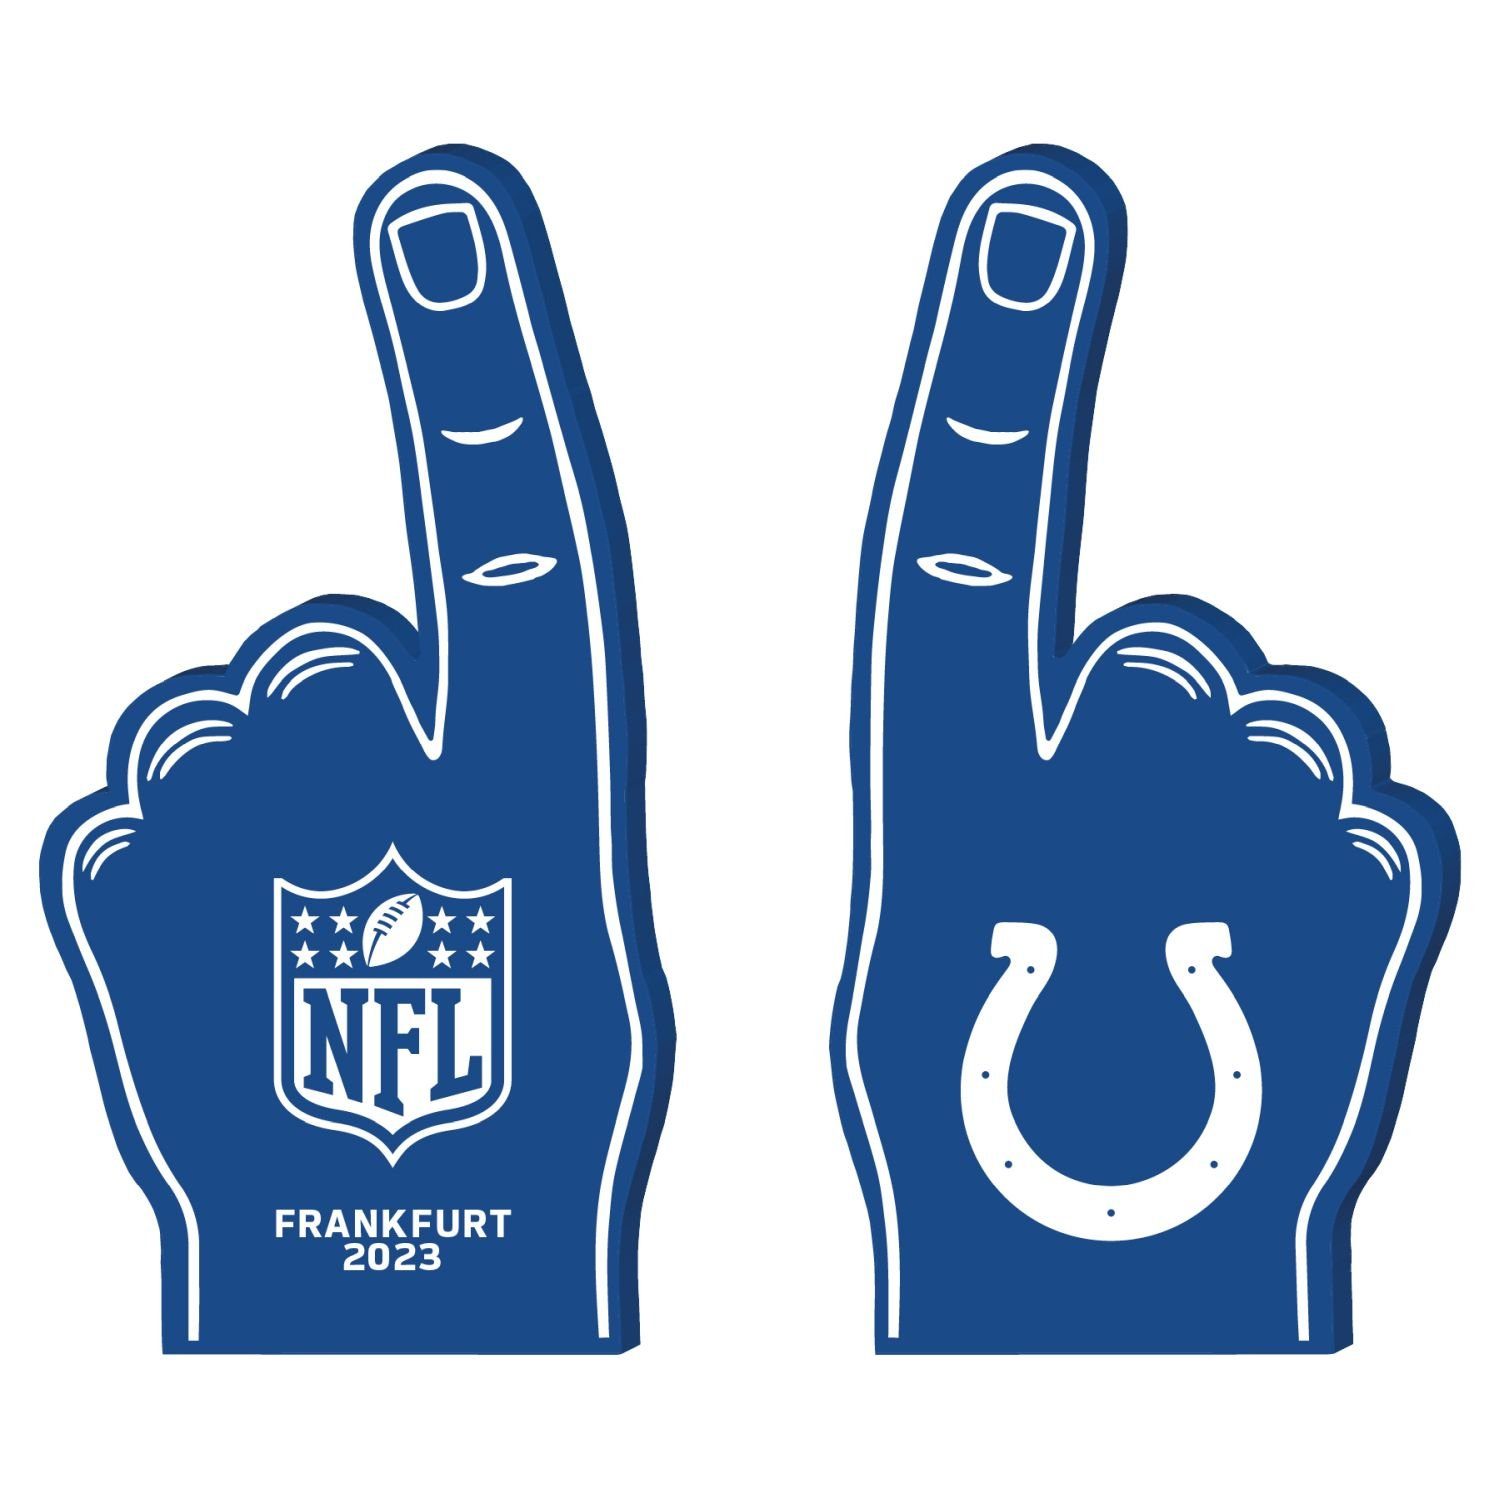 Great Branding Multifunktionstuch NFL Frankfurt Game Indianapolis Colts Foam Finger